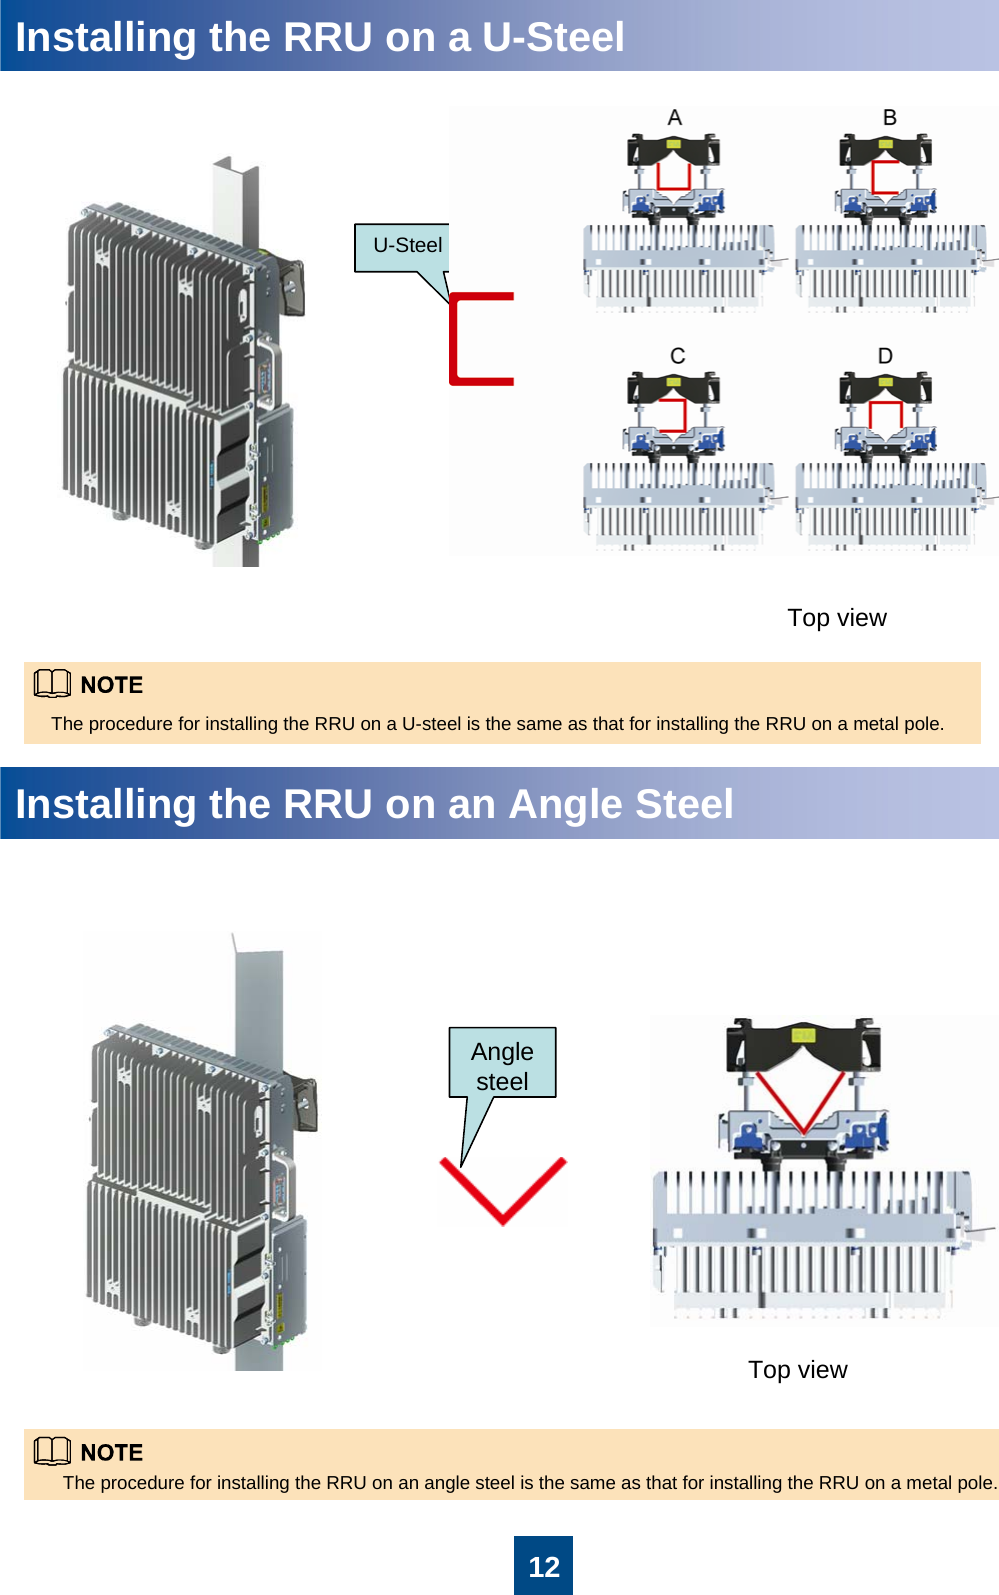 12Installing the RRU on a U-SteelThe procedure for installing the RRU on a U-steel is the same as that for installing the RRU on a metal pole.Installing the RRU on an Angle SteelThe procedure for installing the RRU on an angle steel is the same as that for installing the RRU on a metal pole.Angle steelTop viewTop viewU-Steel